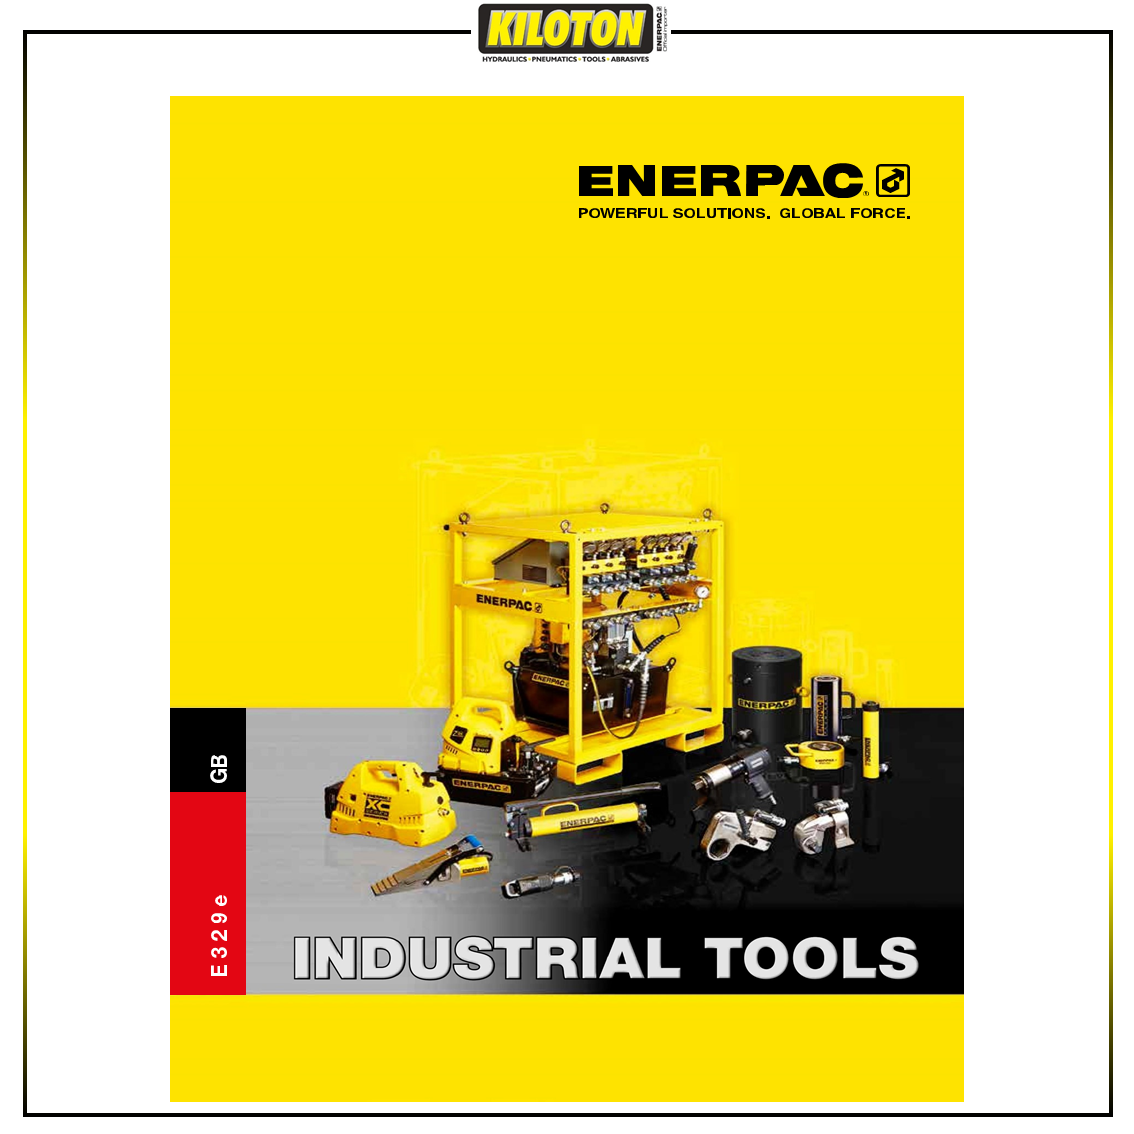 KILATON - Enerpac Industrial Tools Catalogue